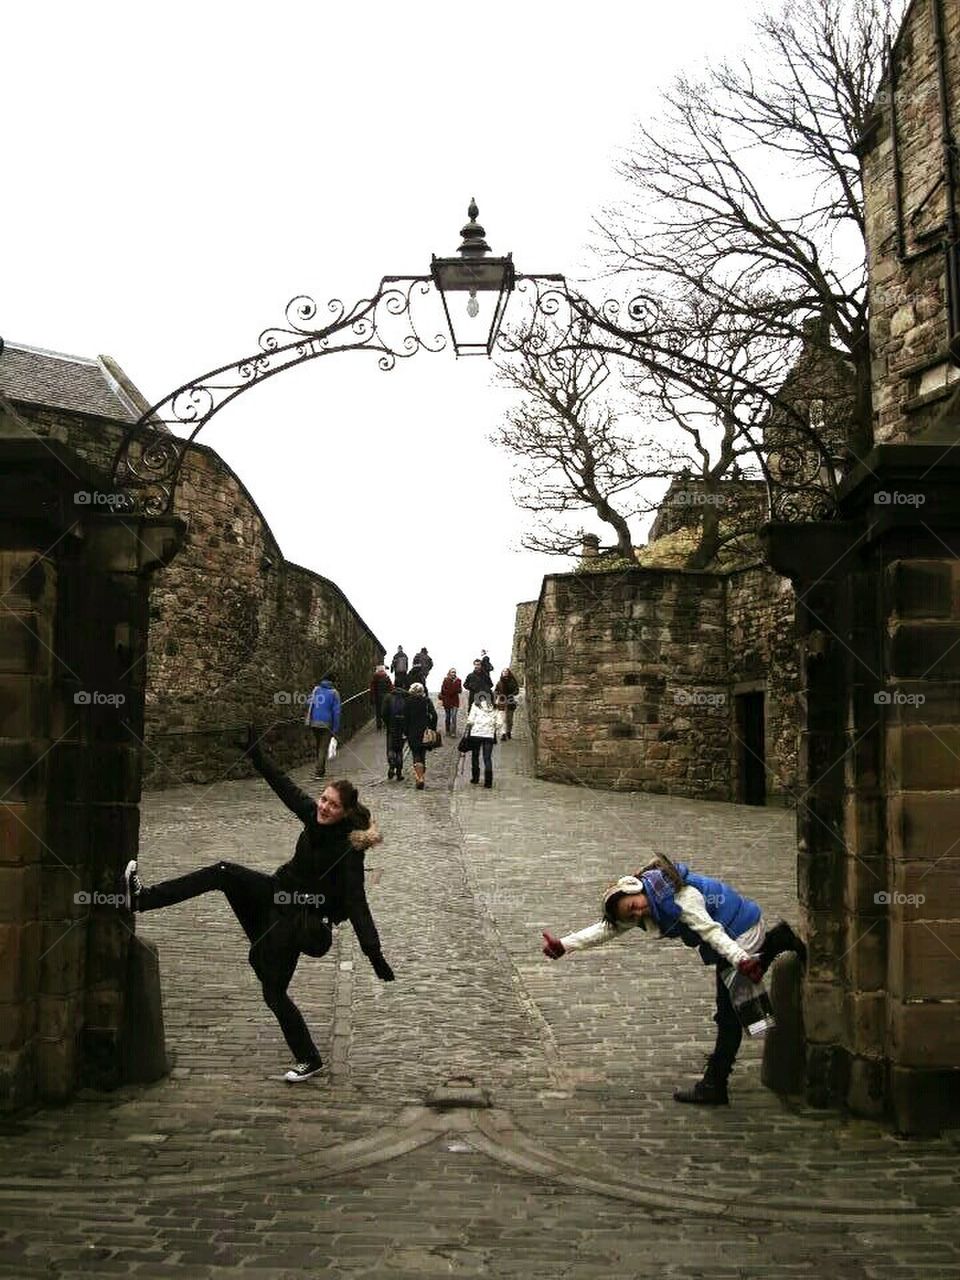 Inside Edinburgh Castle